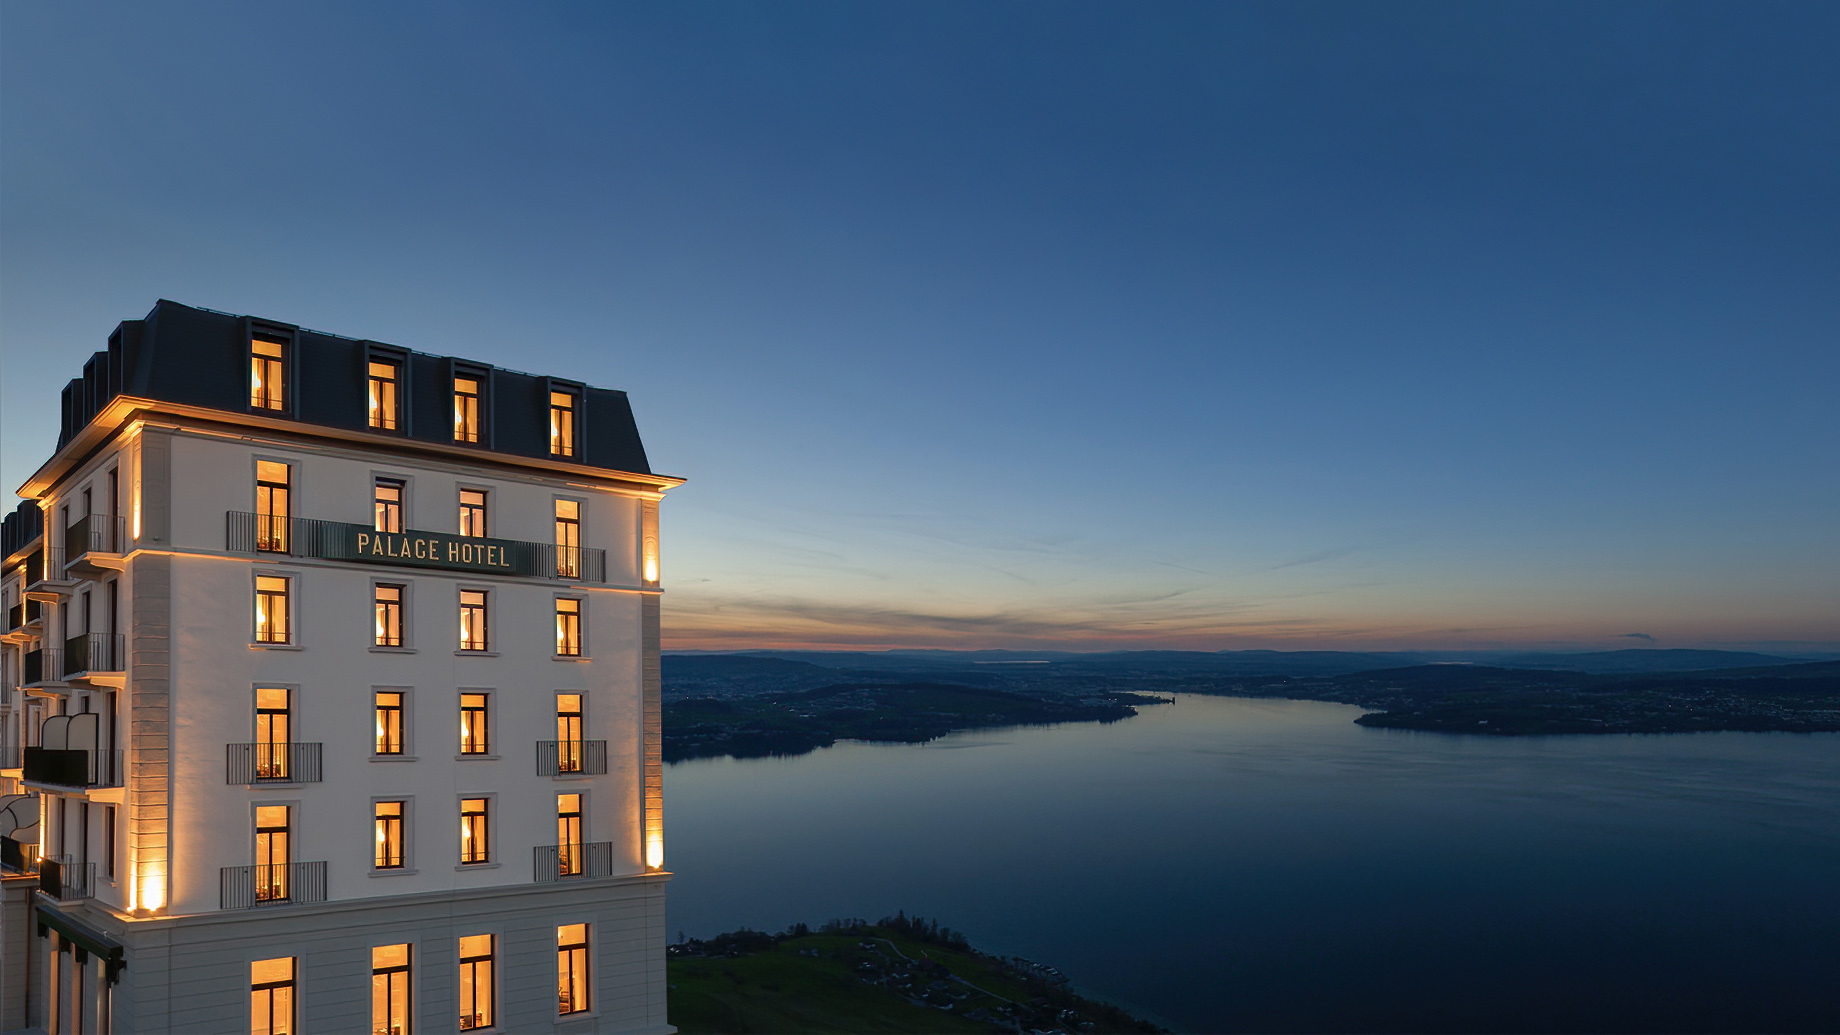 Palace Hotel – Burgenstock Hotels & Resort – Obburgen, Switzerland – Palace Hotel Lakeview at Night